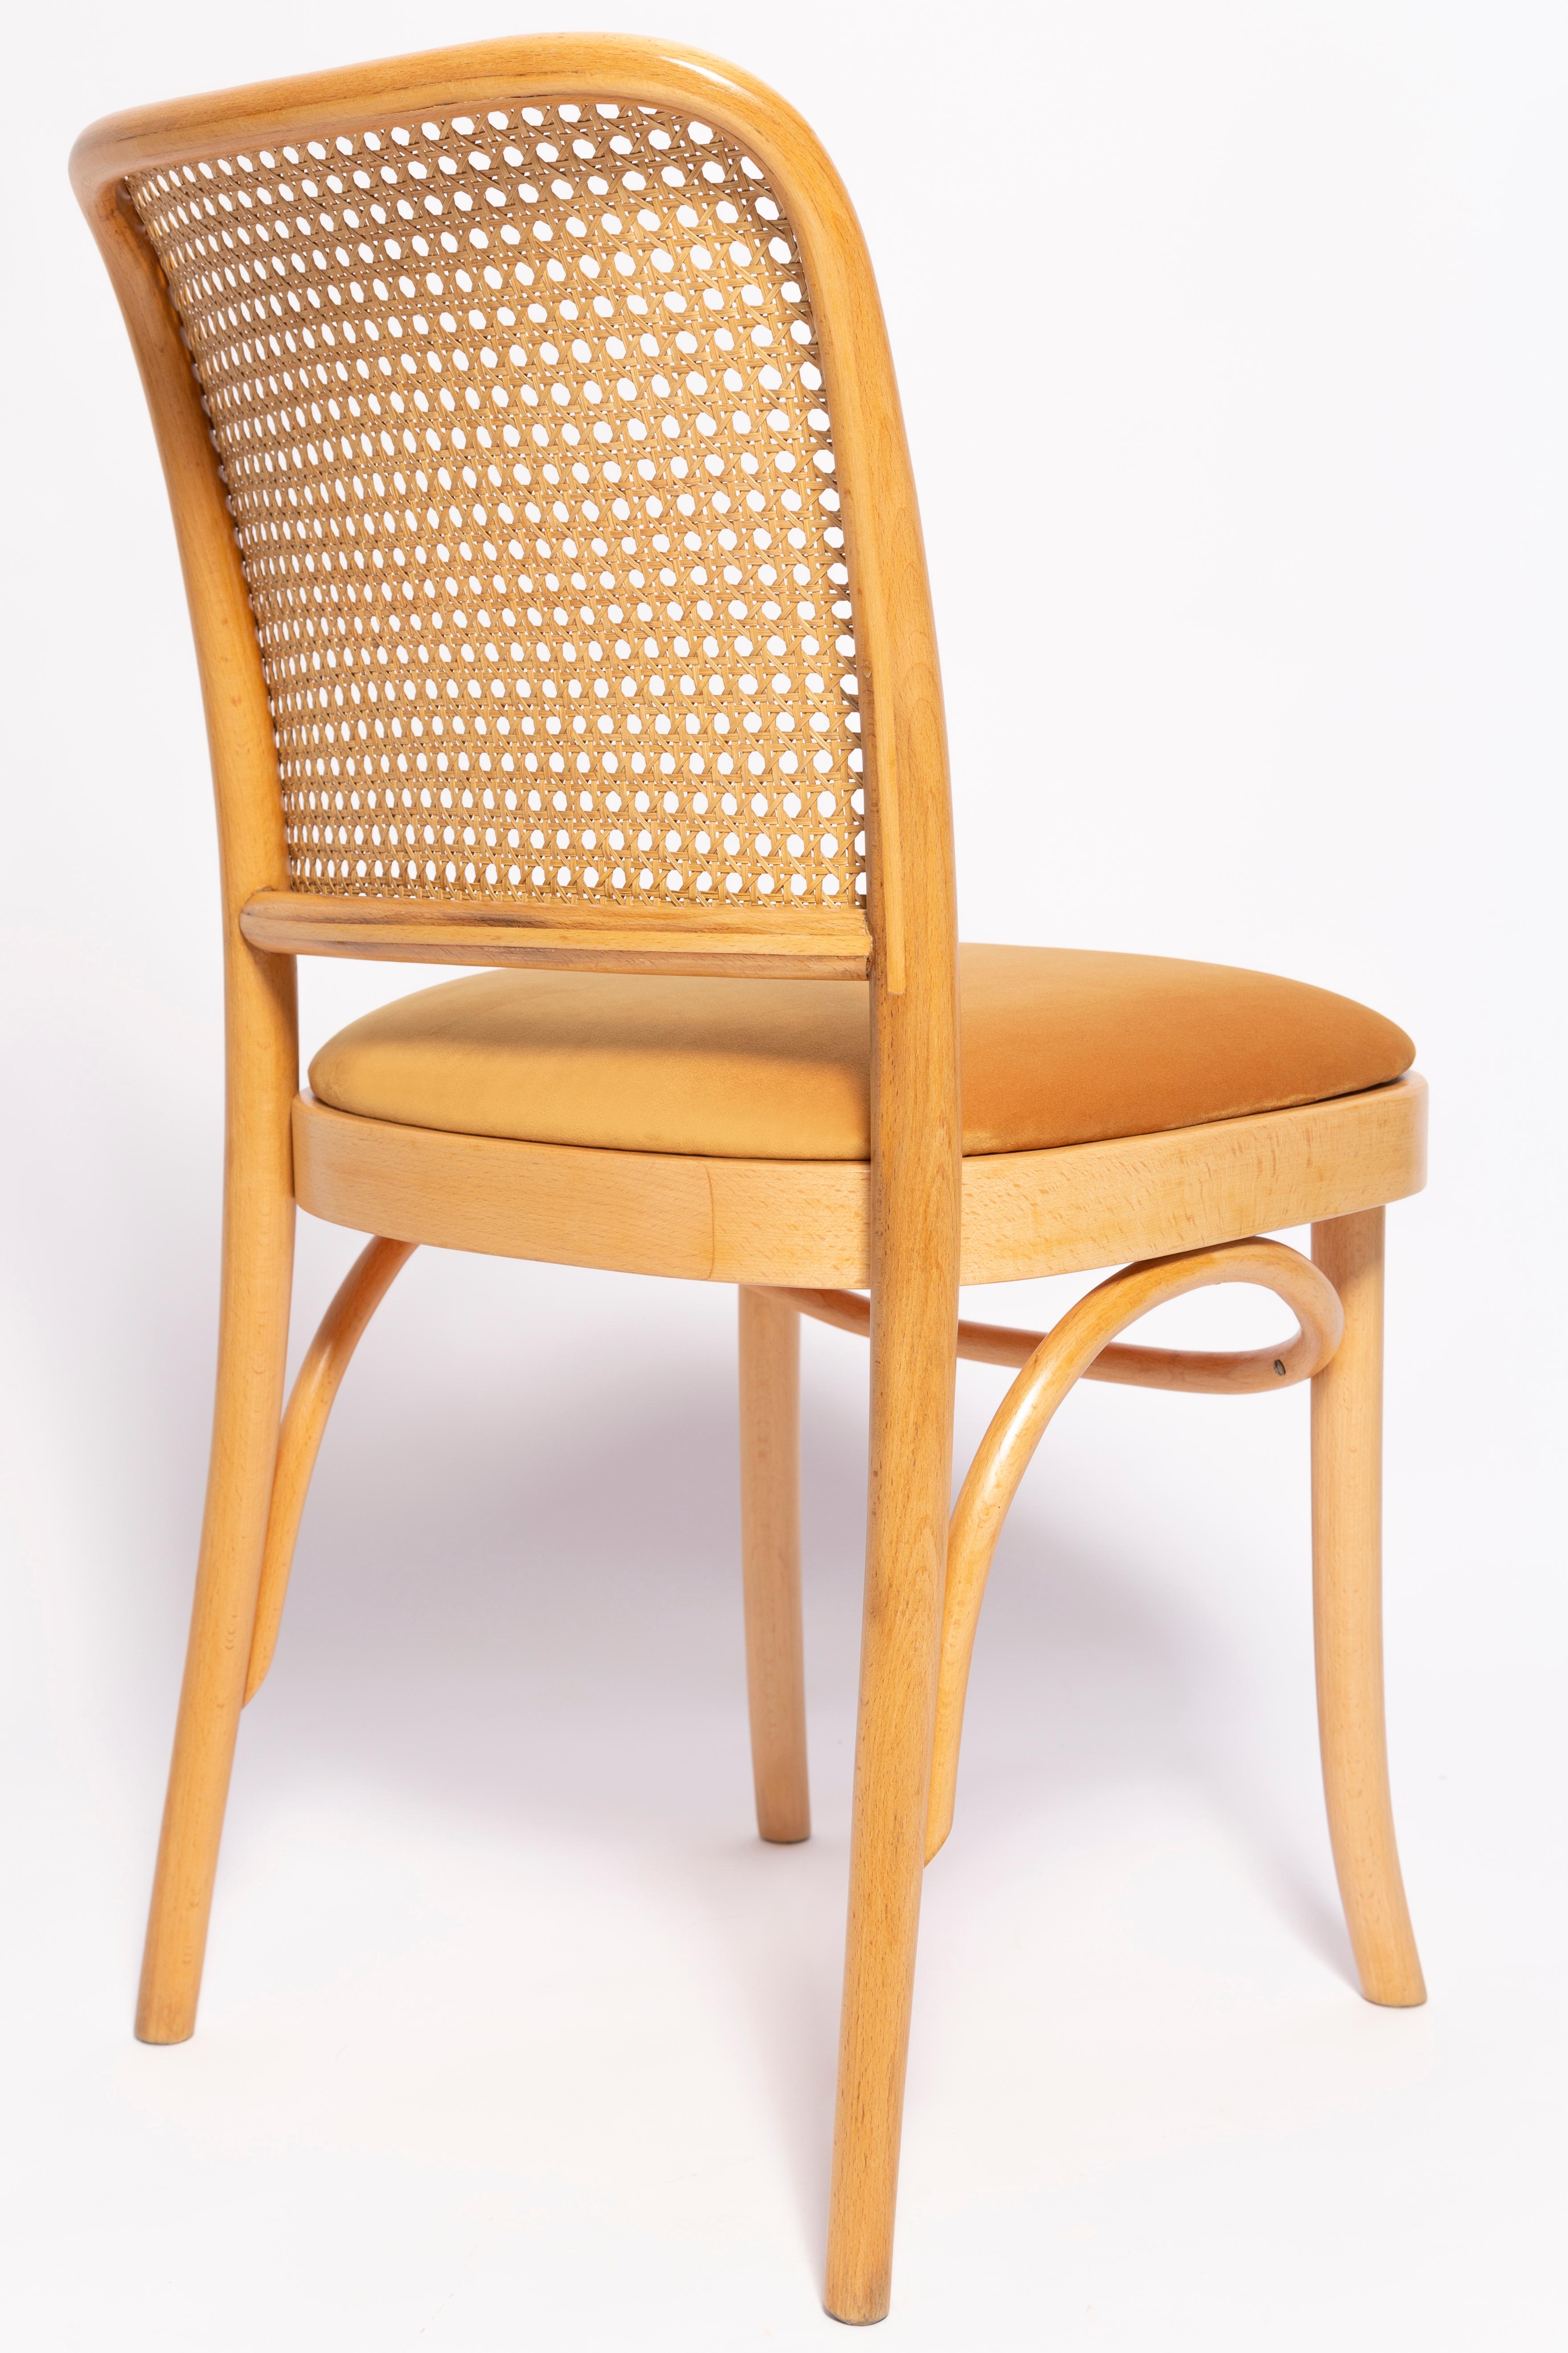 Mid-Century Yellow Velvet Thonet Wood Rattan Chair, Europe, 1960s For Sale 2